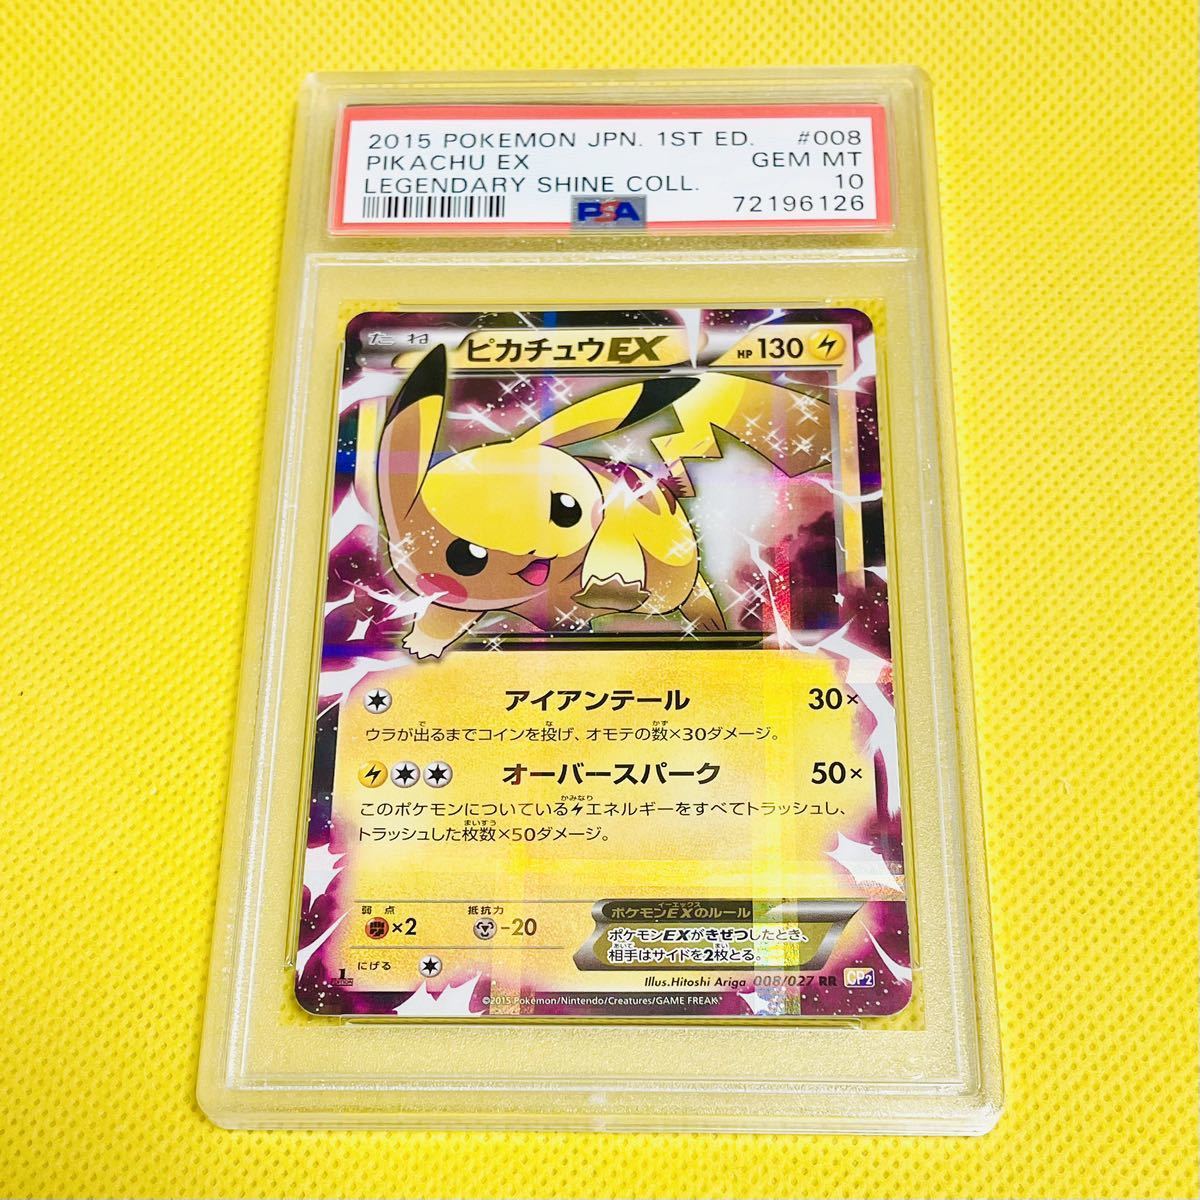 ★PSA10★GEM MINT【ピカチュウEX/RR/CP2】2015 Pikachu EX 1st Edition 008/027【ポケカ/Pokemon Cards】Legendary Shine Collection